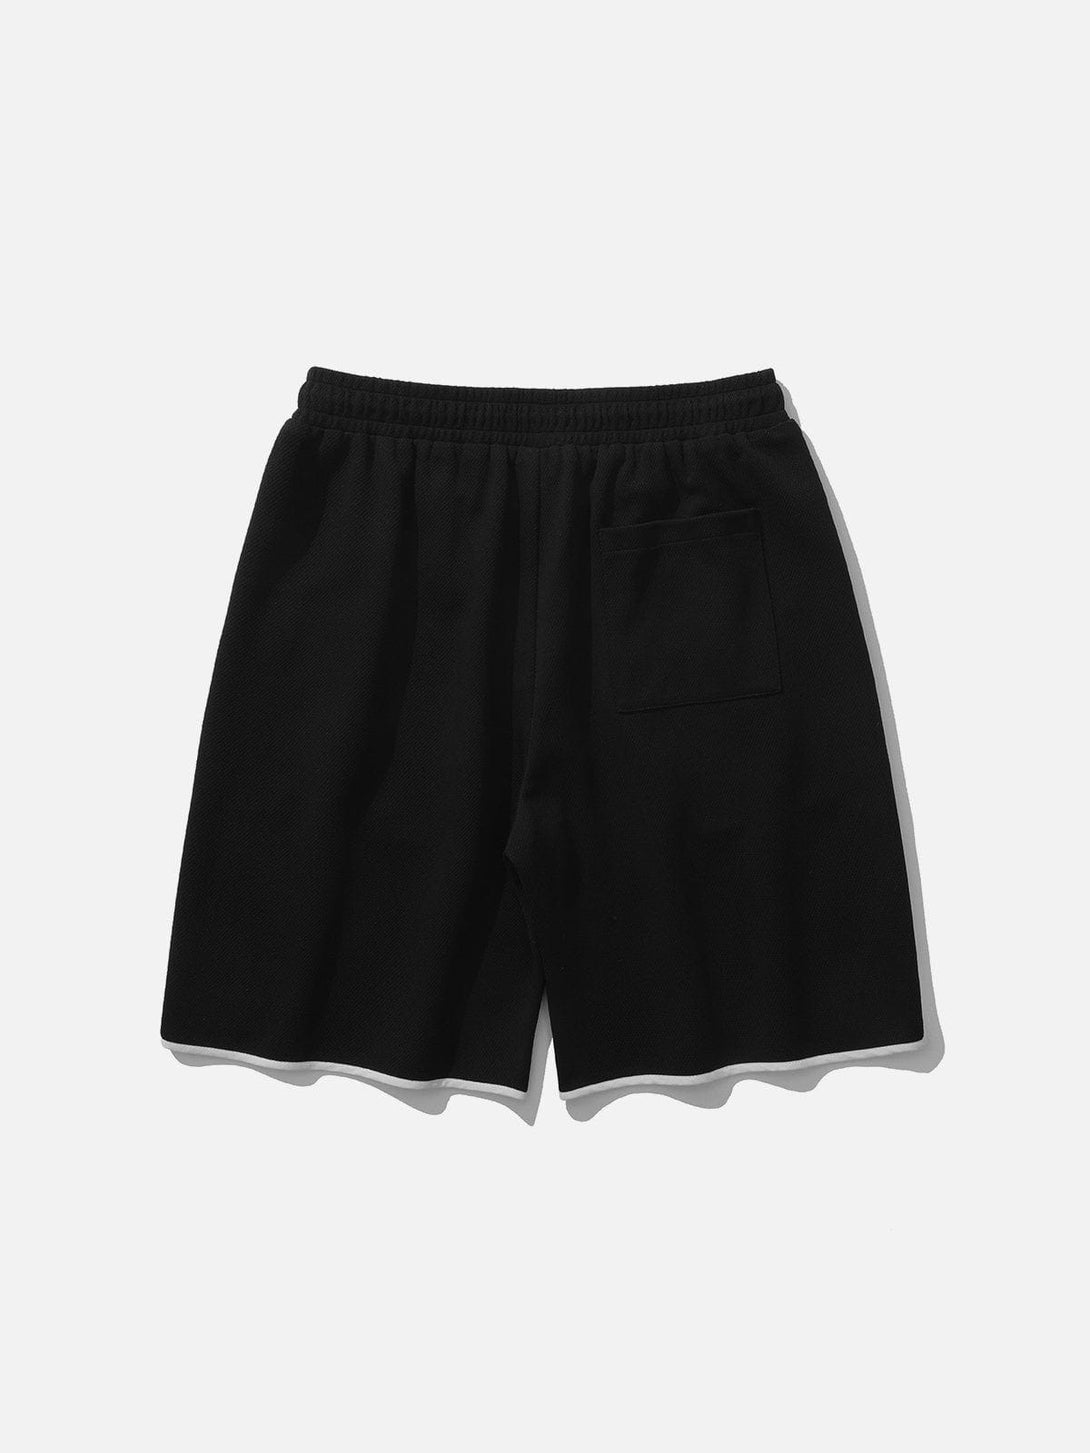 Majesda® - Side Stripe Shorts outfit ideas streetwear fashion